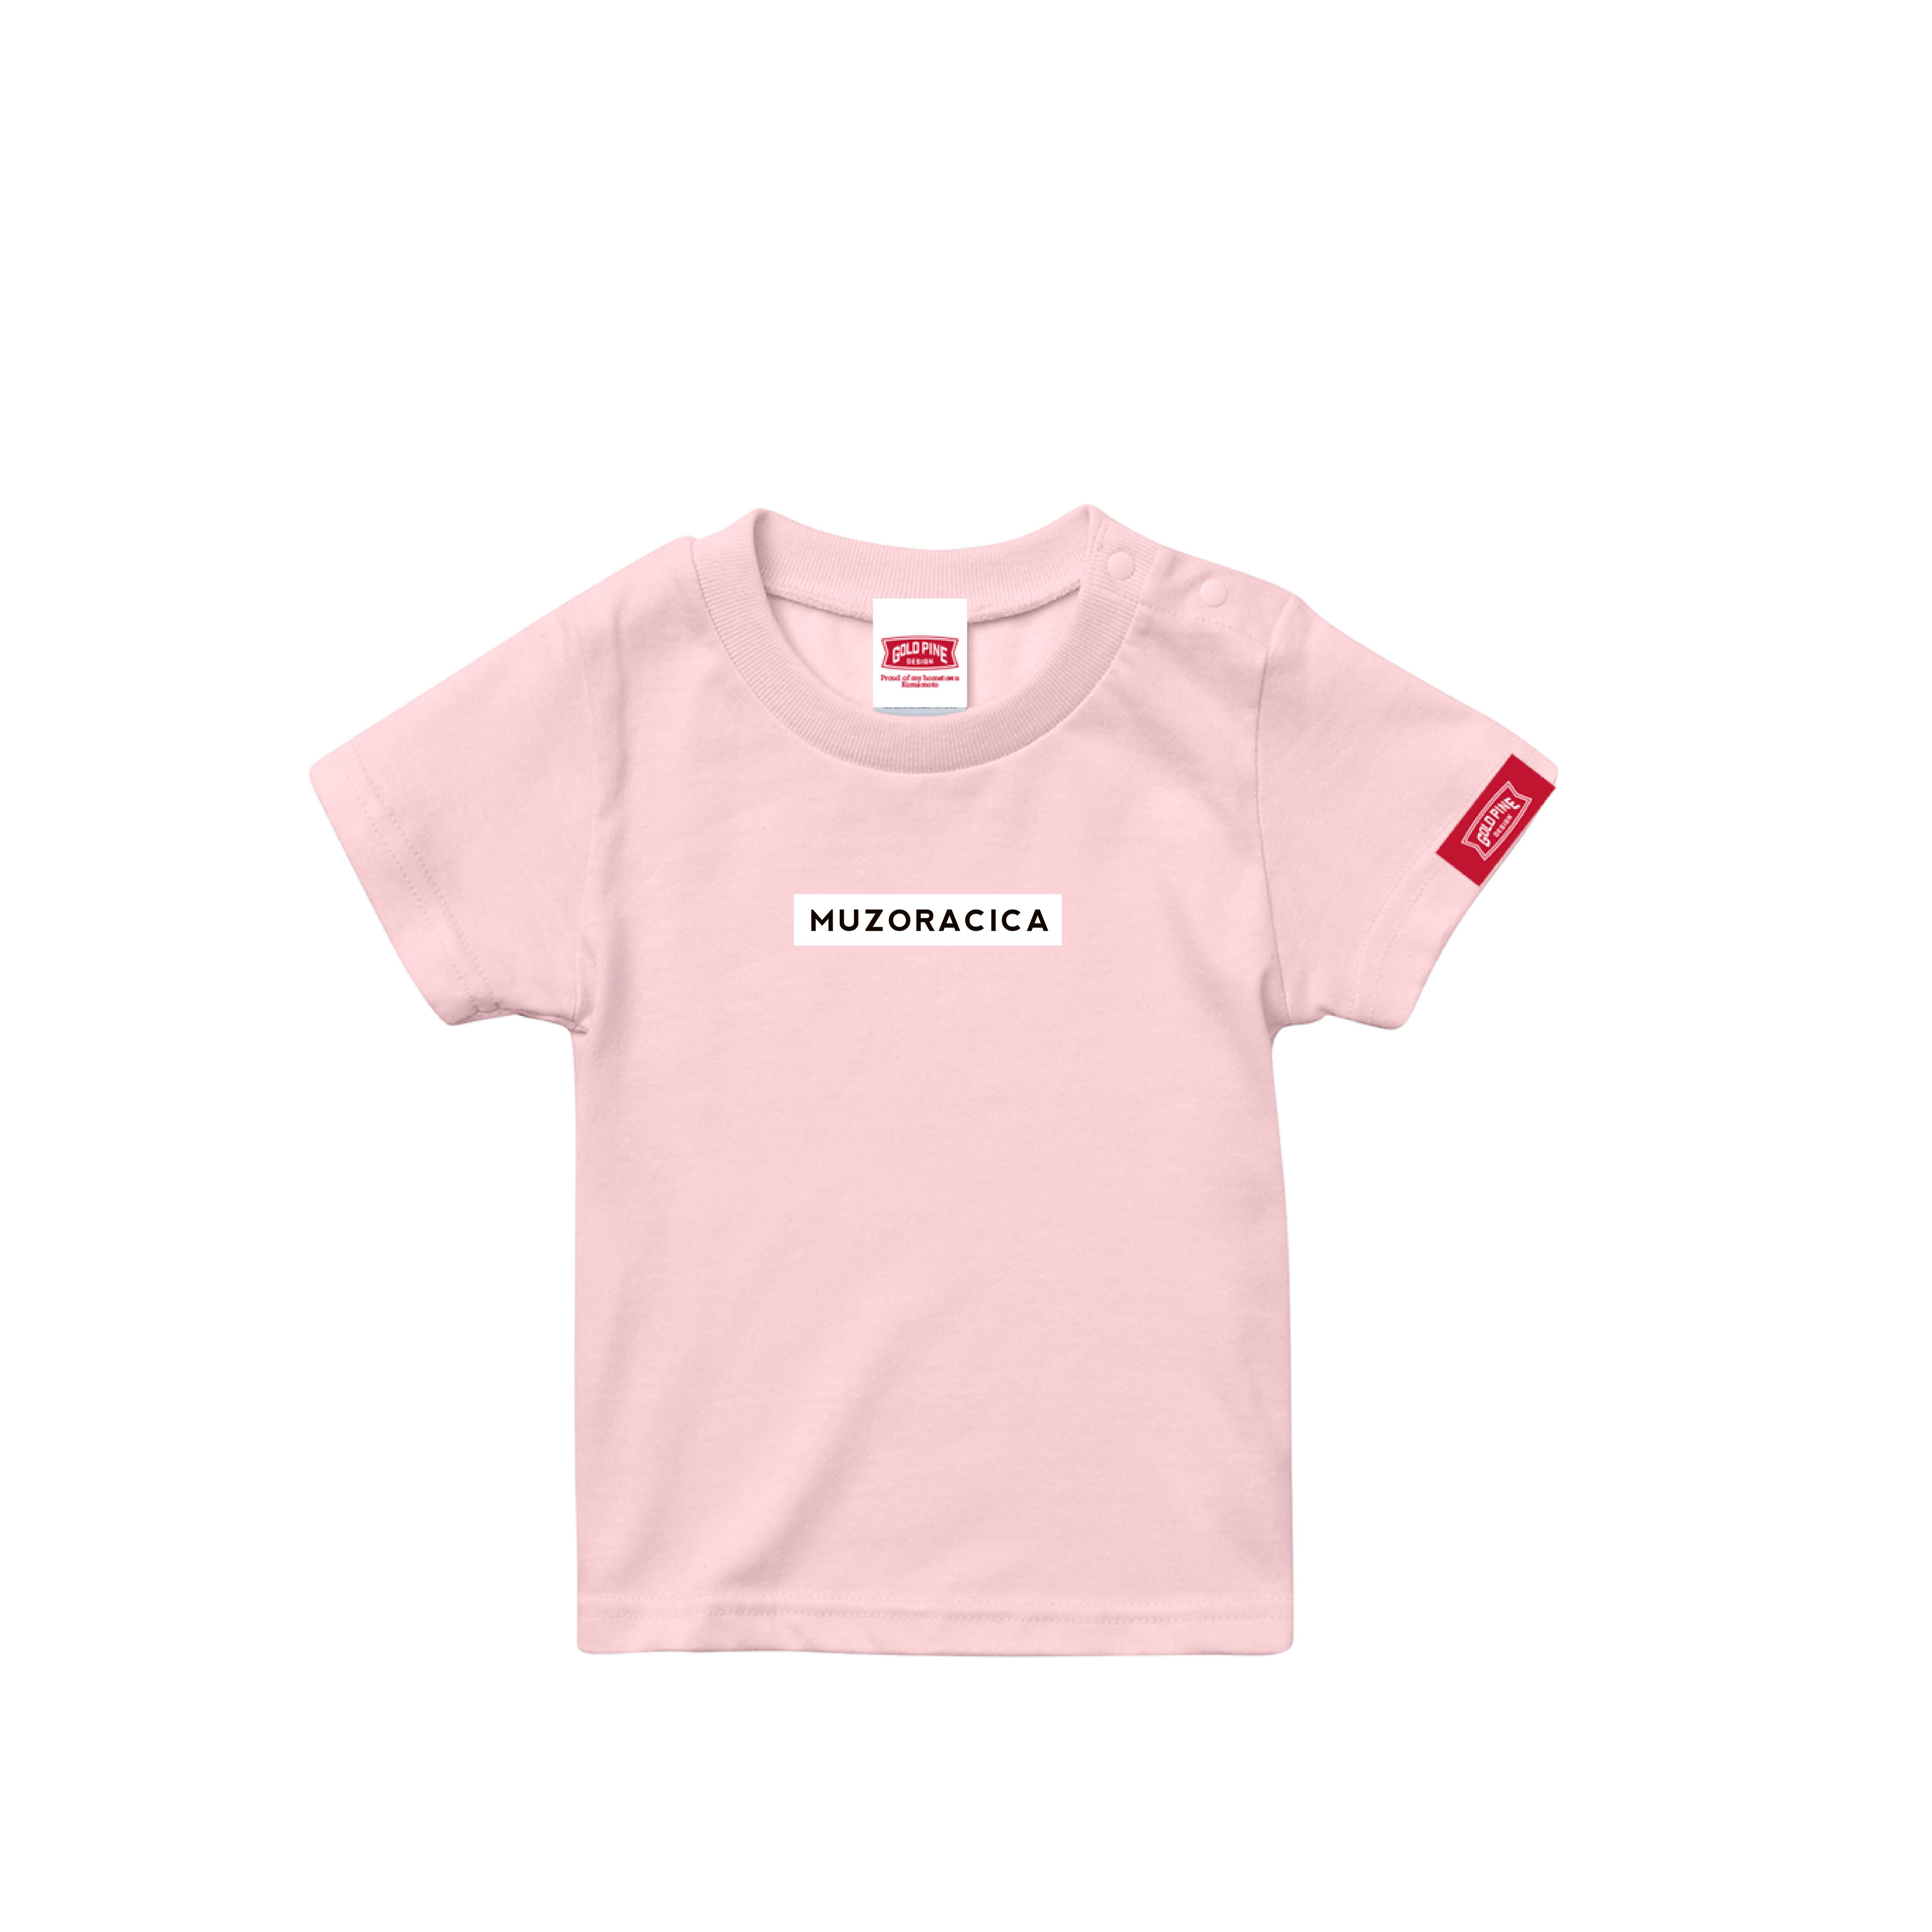 MUZORACICA-Tshirt【Kids】BabyPink